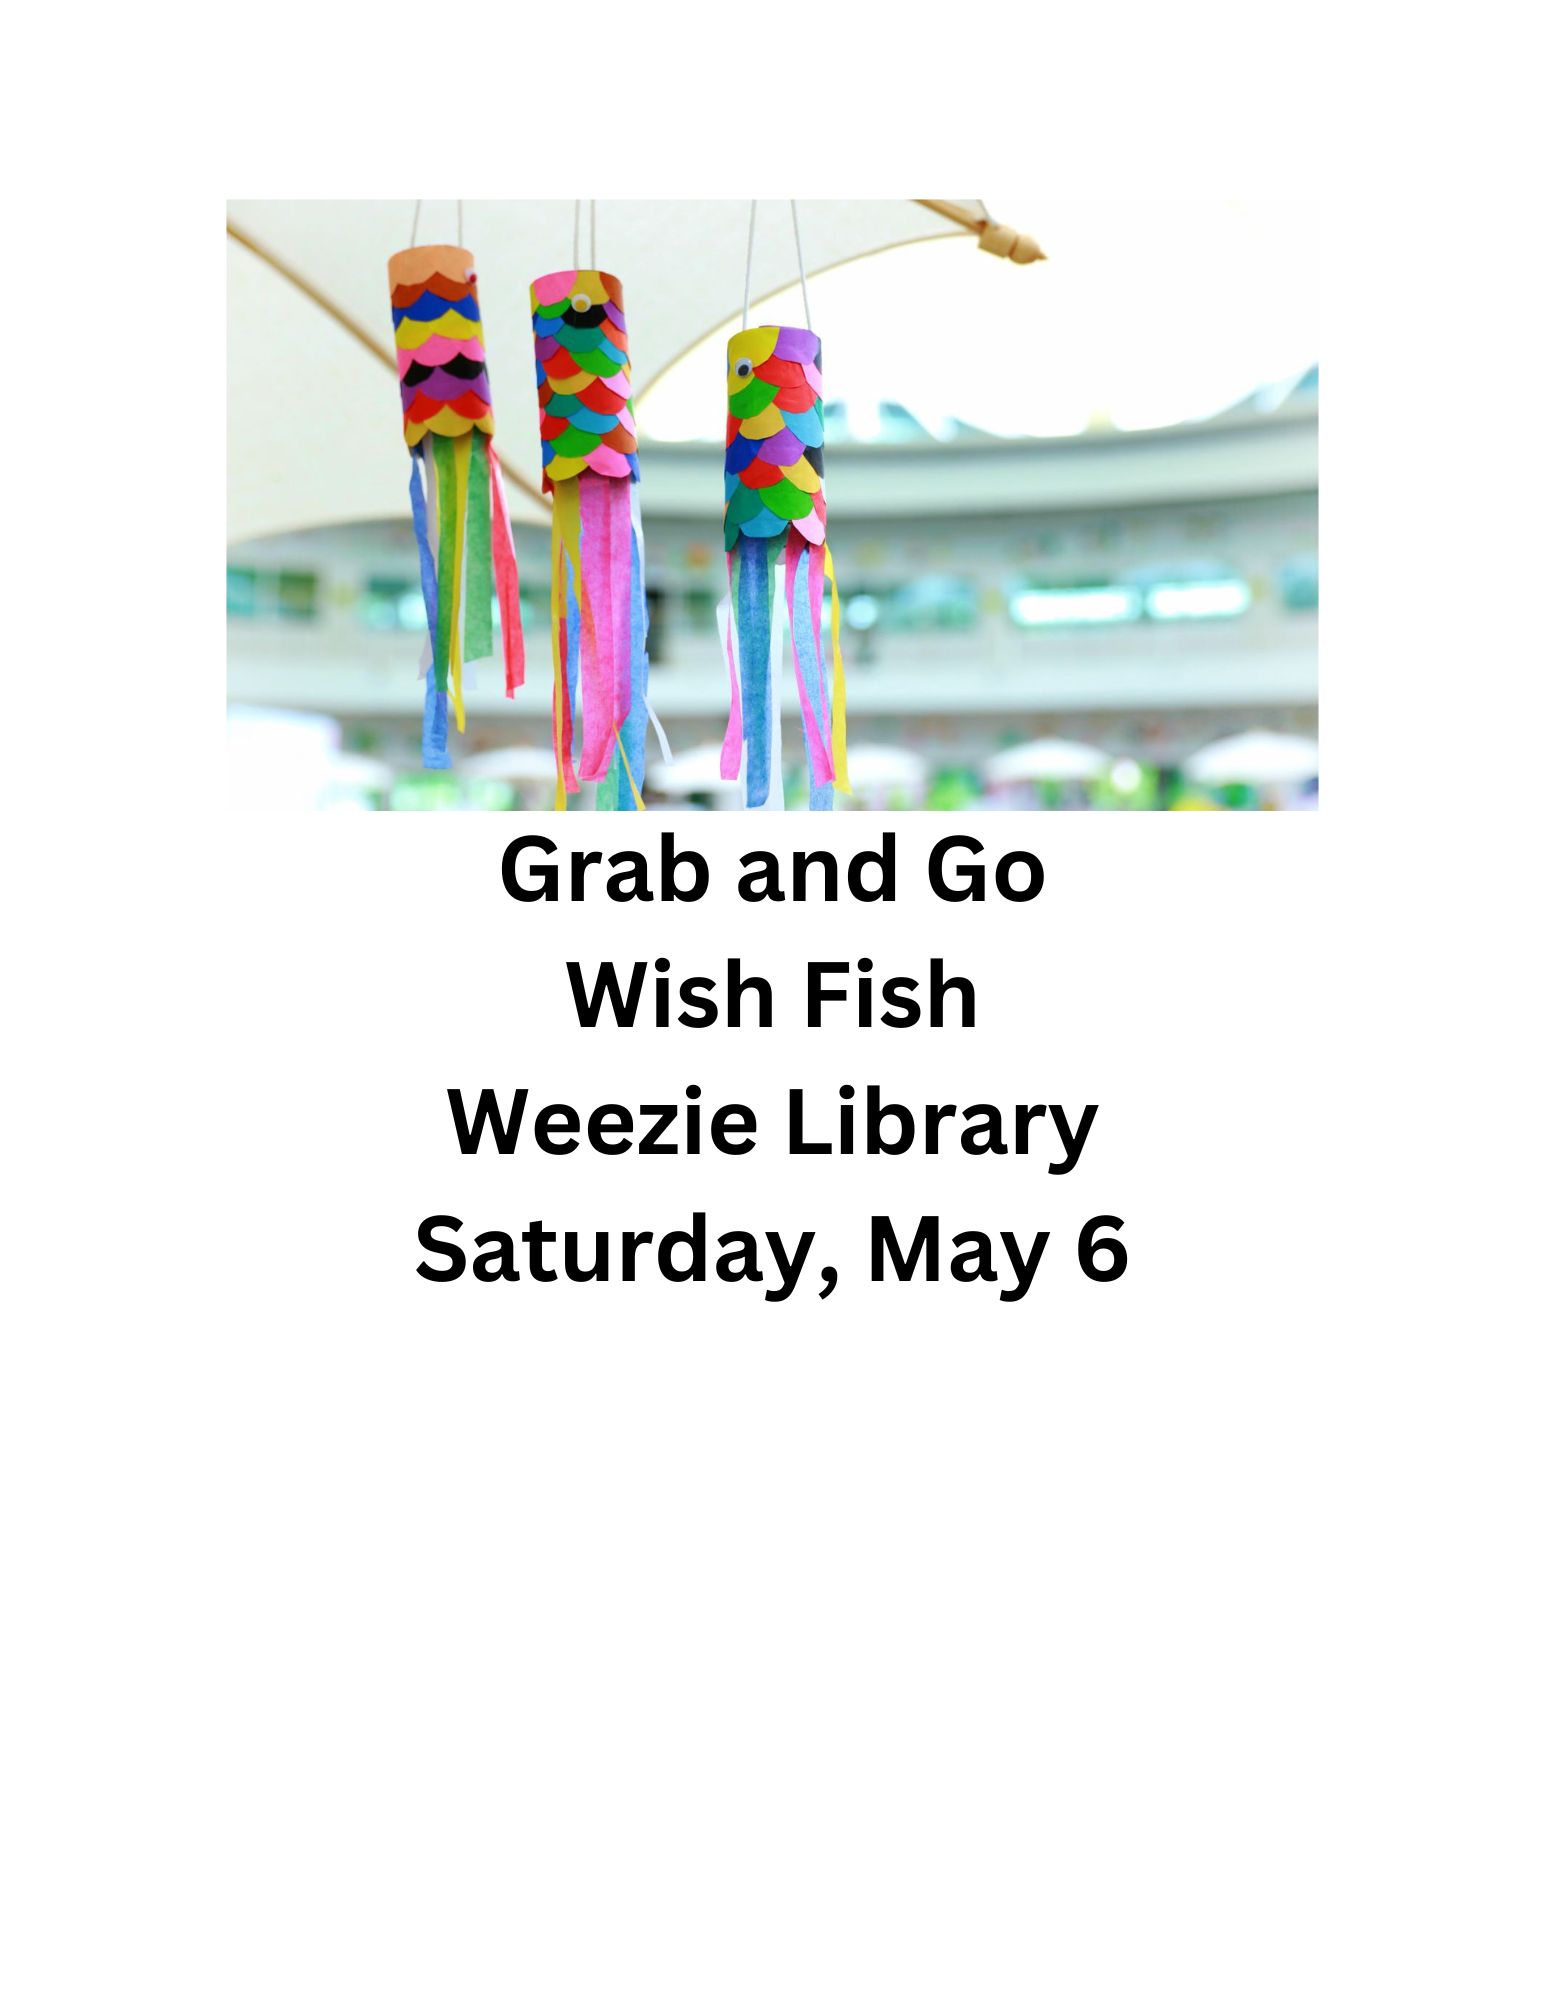 Grab and Go Wish Fish